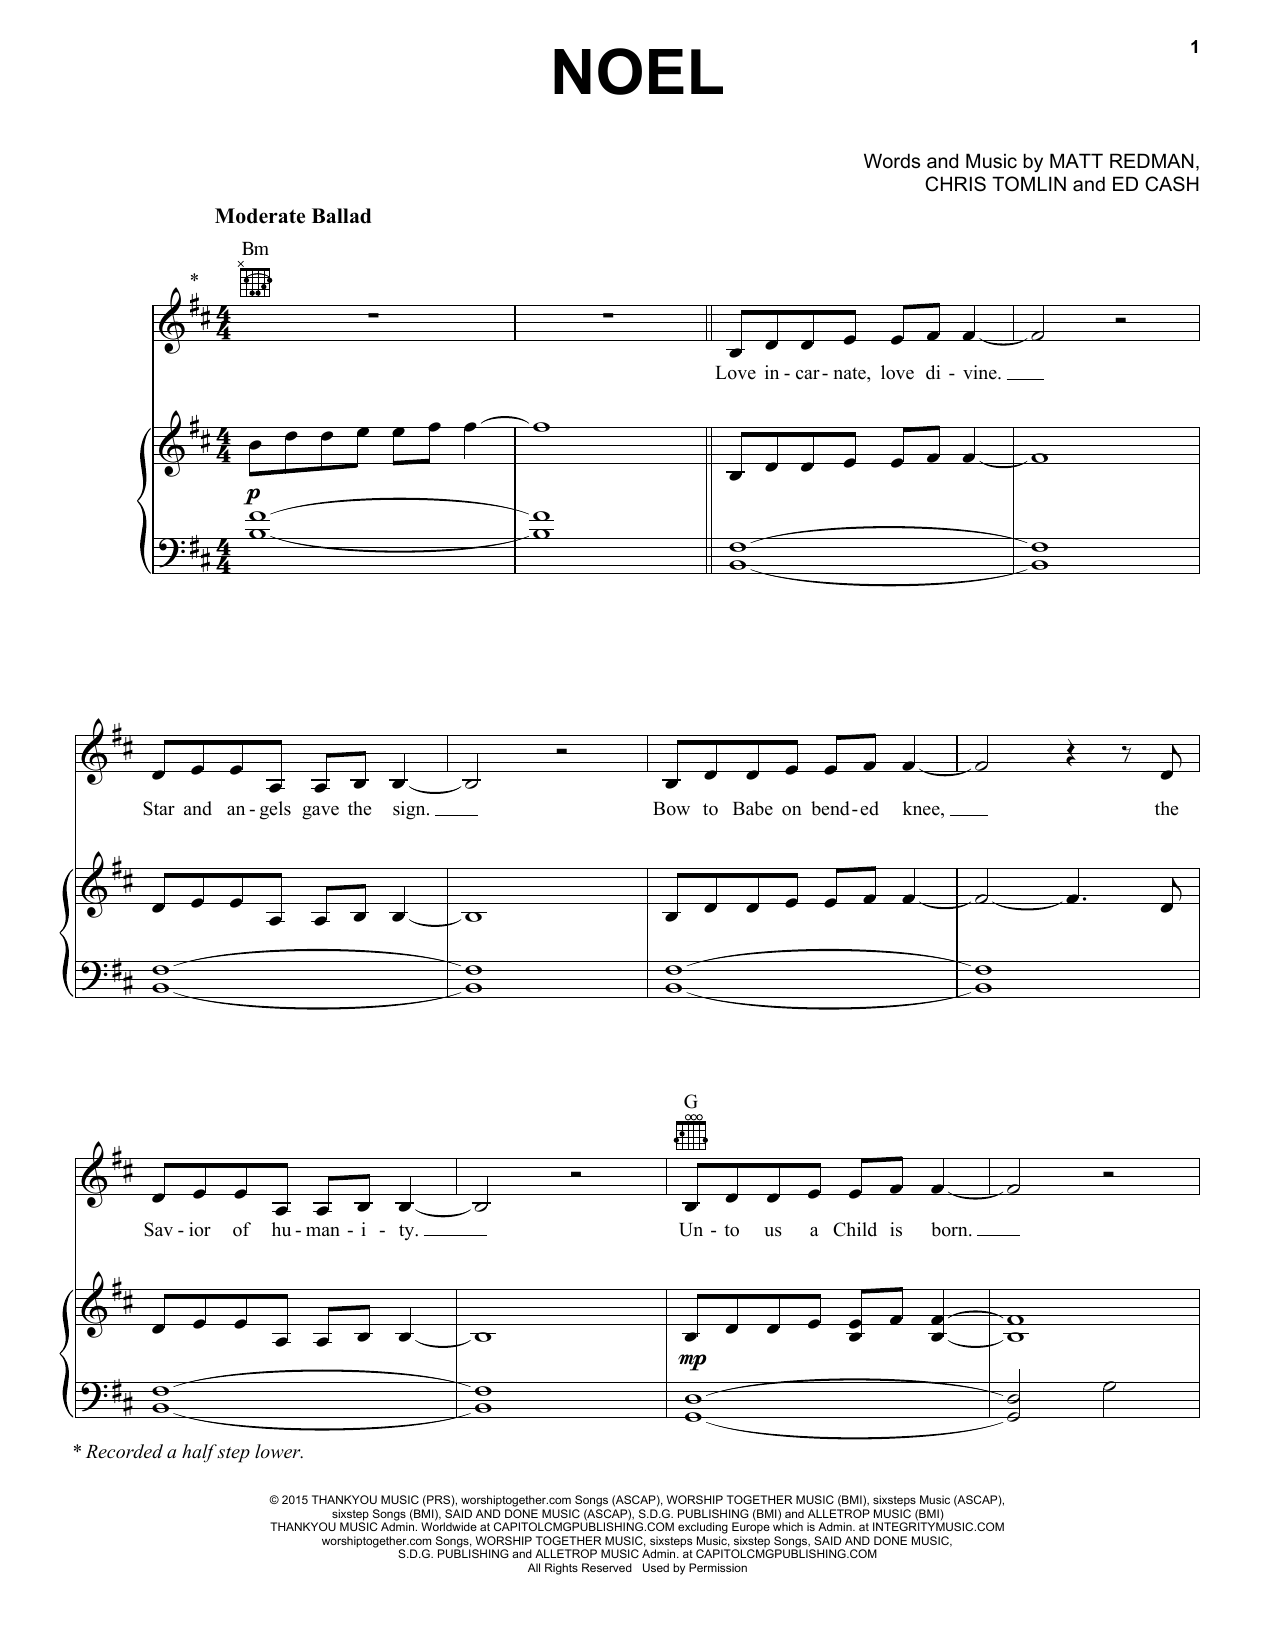 Chris Tomlin Noel (feat. Lauren Daigle) Sheet Music Notes & Chords for Ukulele - Download or Print PDF